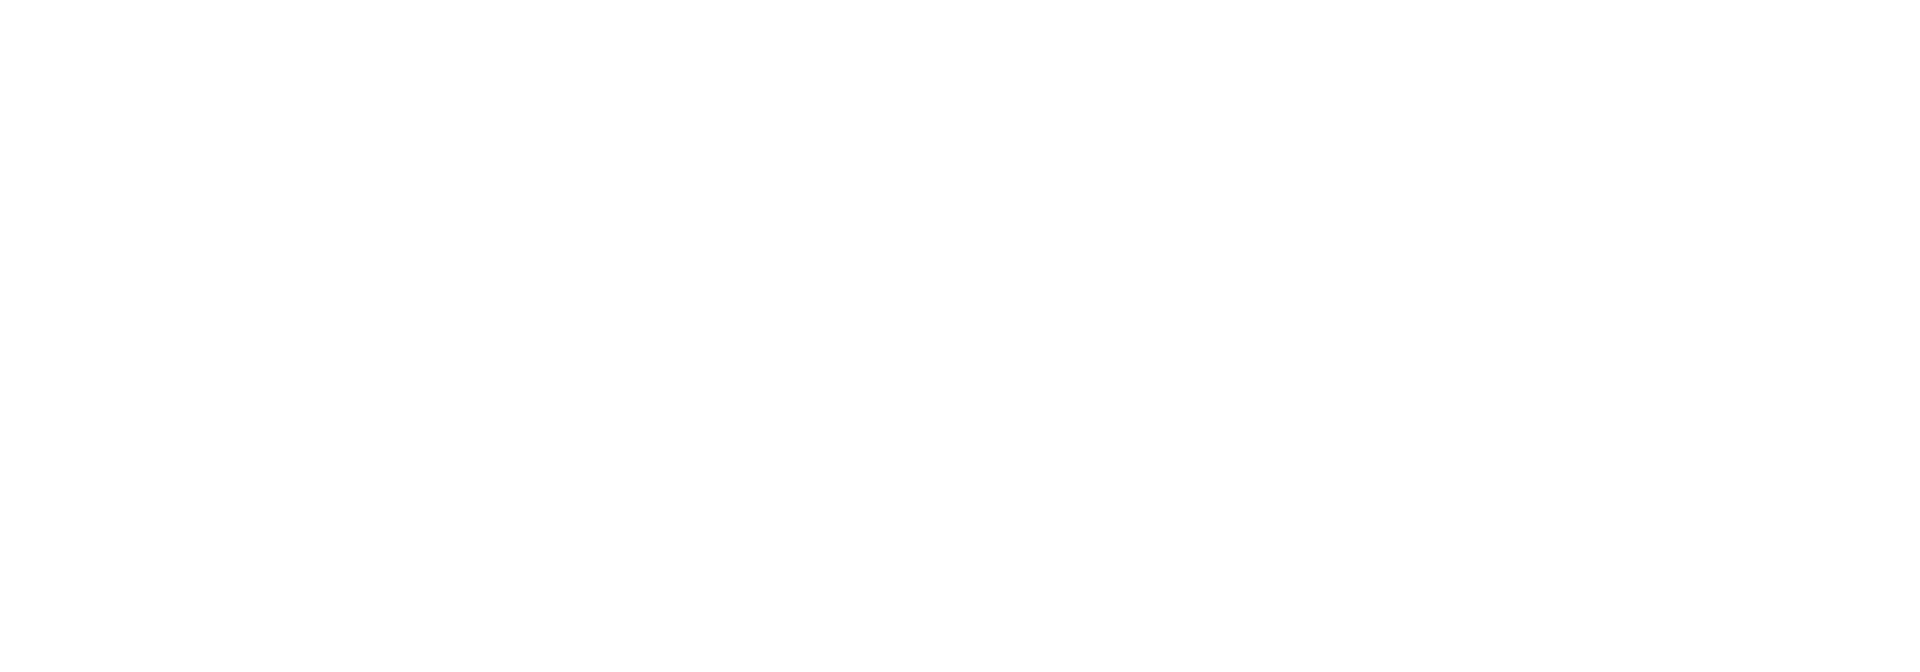 CBE Construction_White